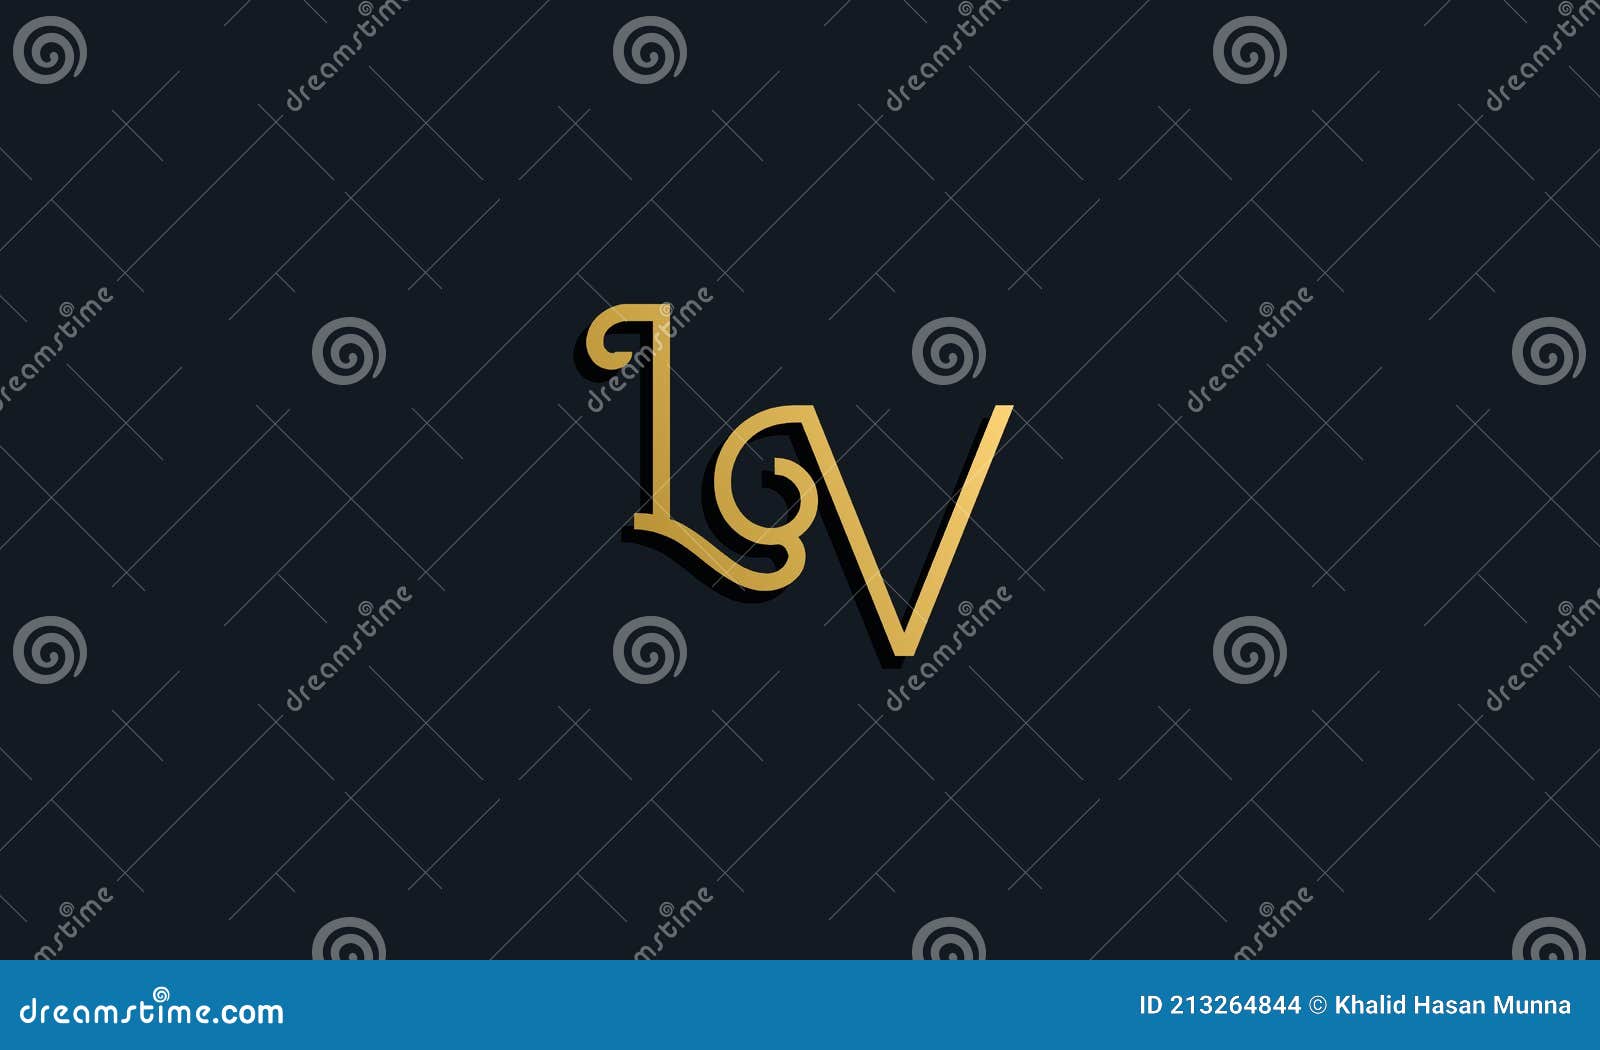 luxury l v logo design